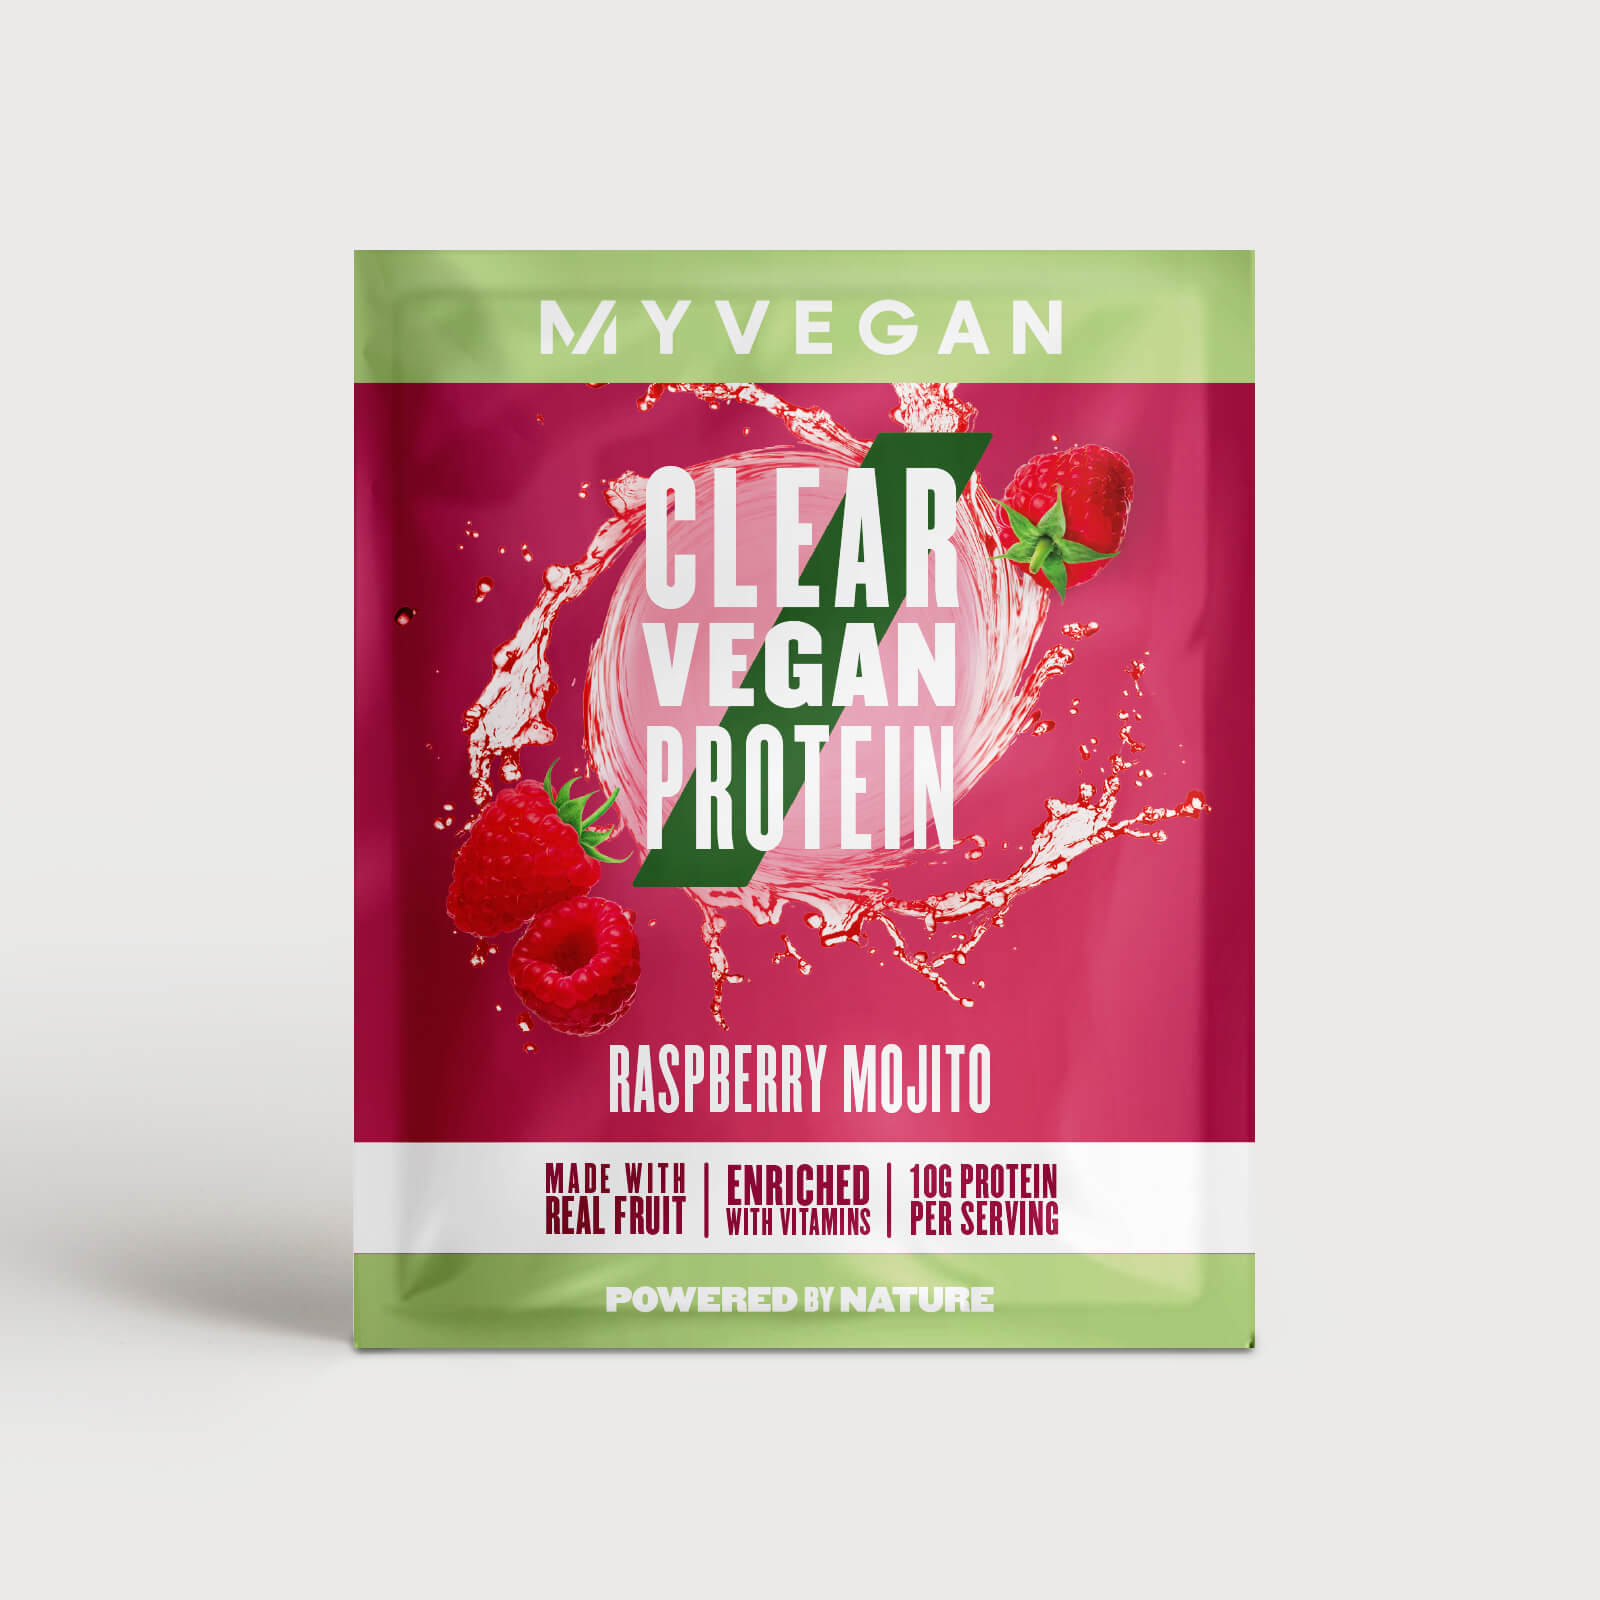 Myvegan Clear Vegan Protein (Sample) - 16g - Raspberry Mojito